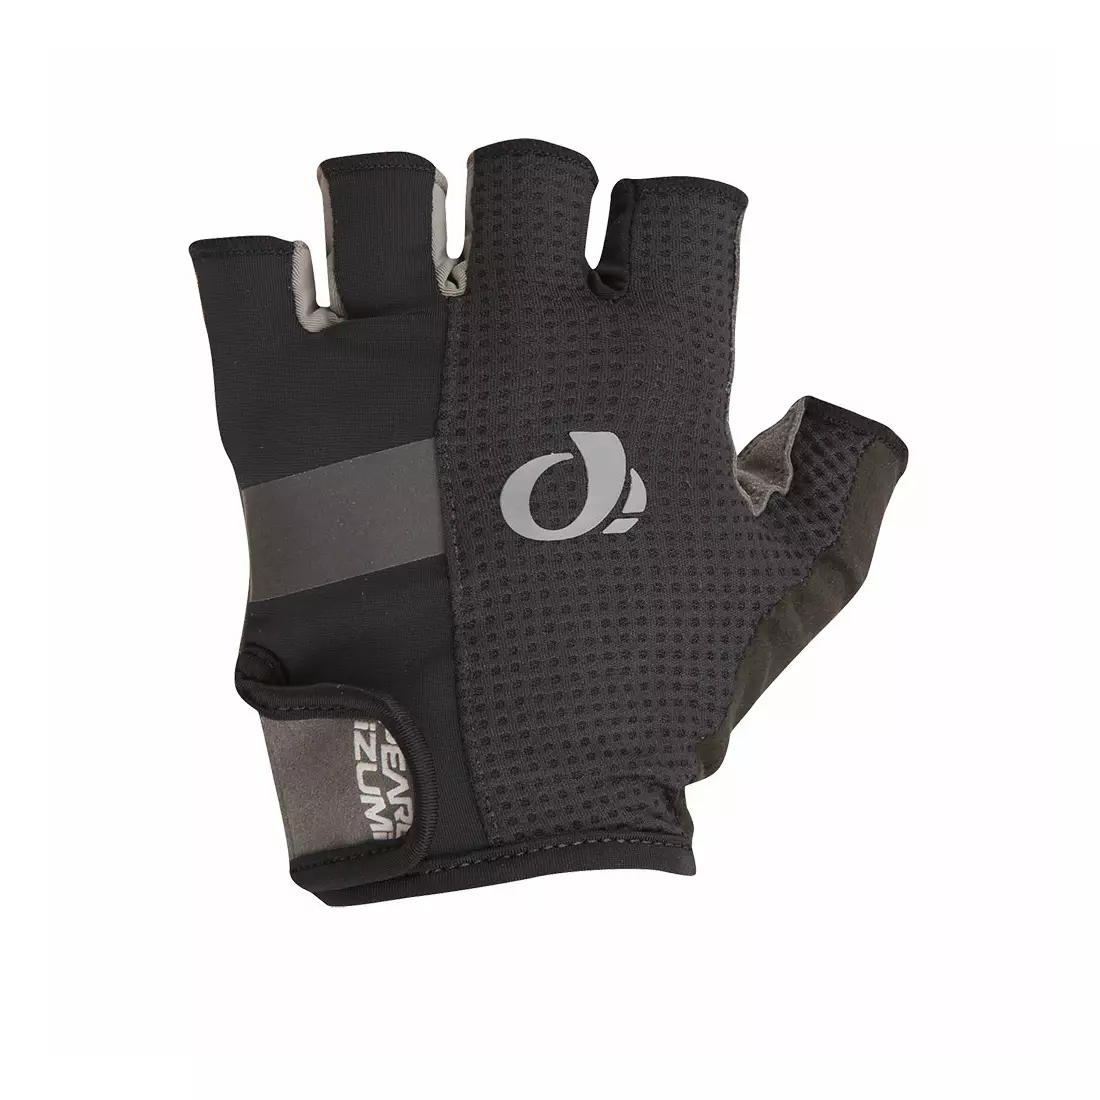 PEARL IZUMI ELITE cycling gloves, GEL 14141601-021 black